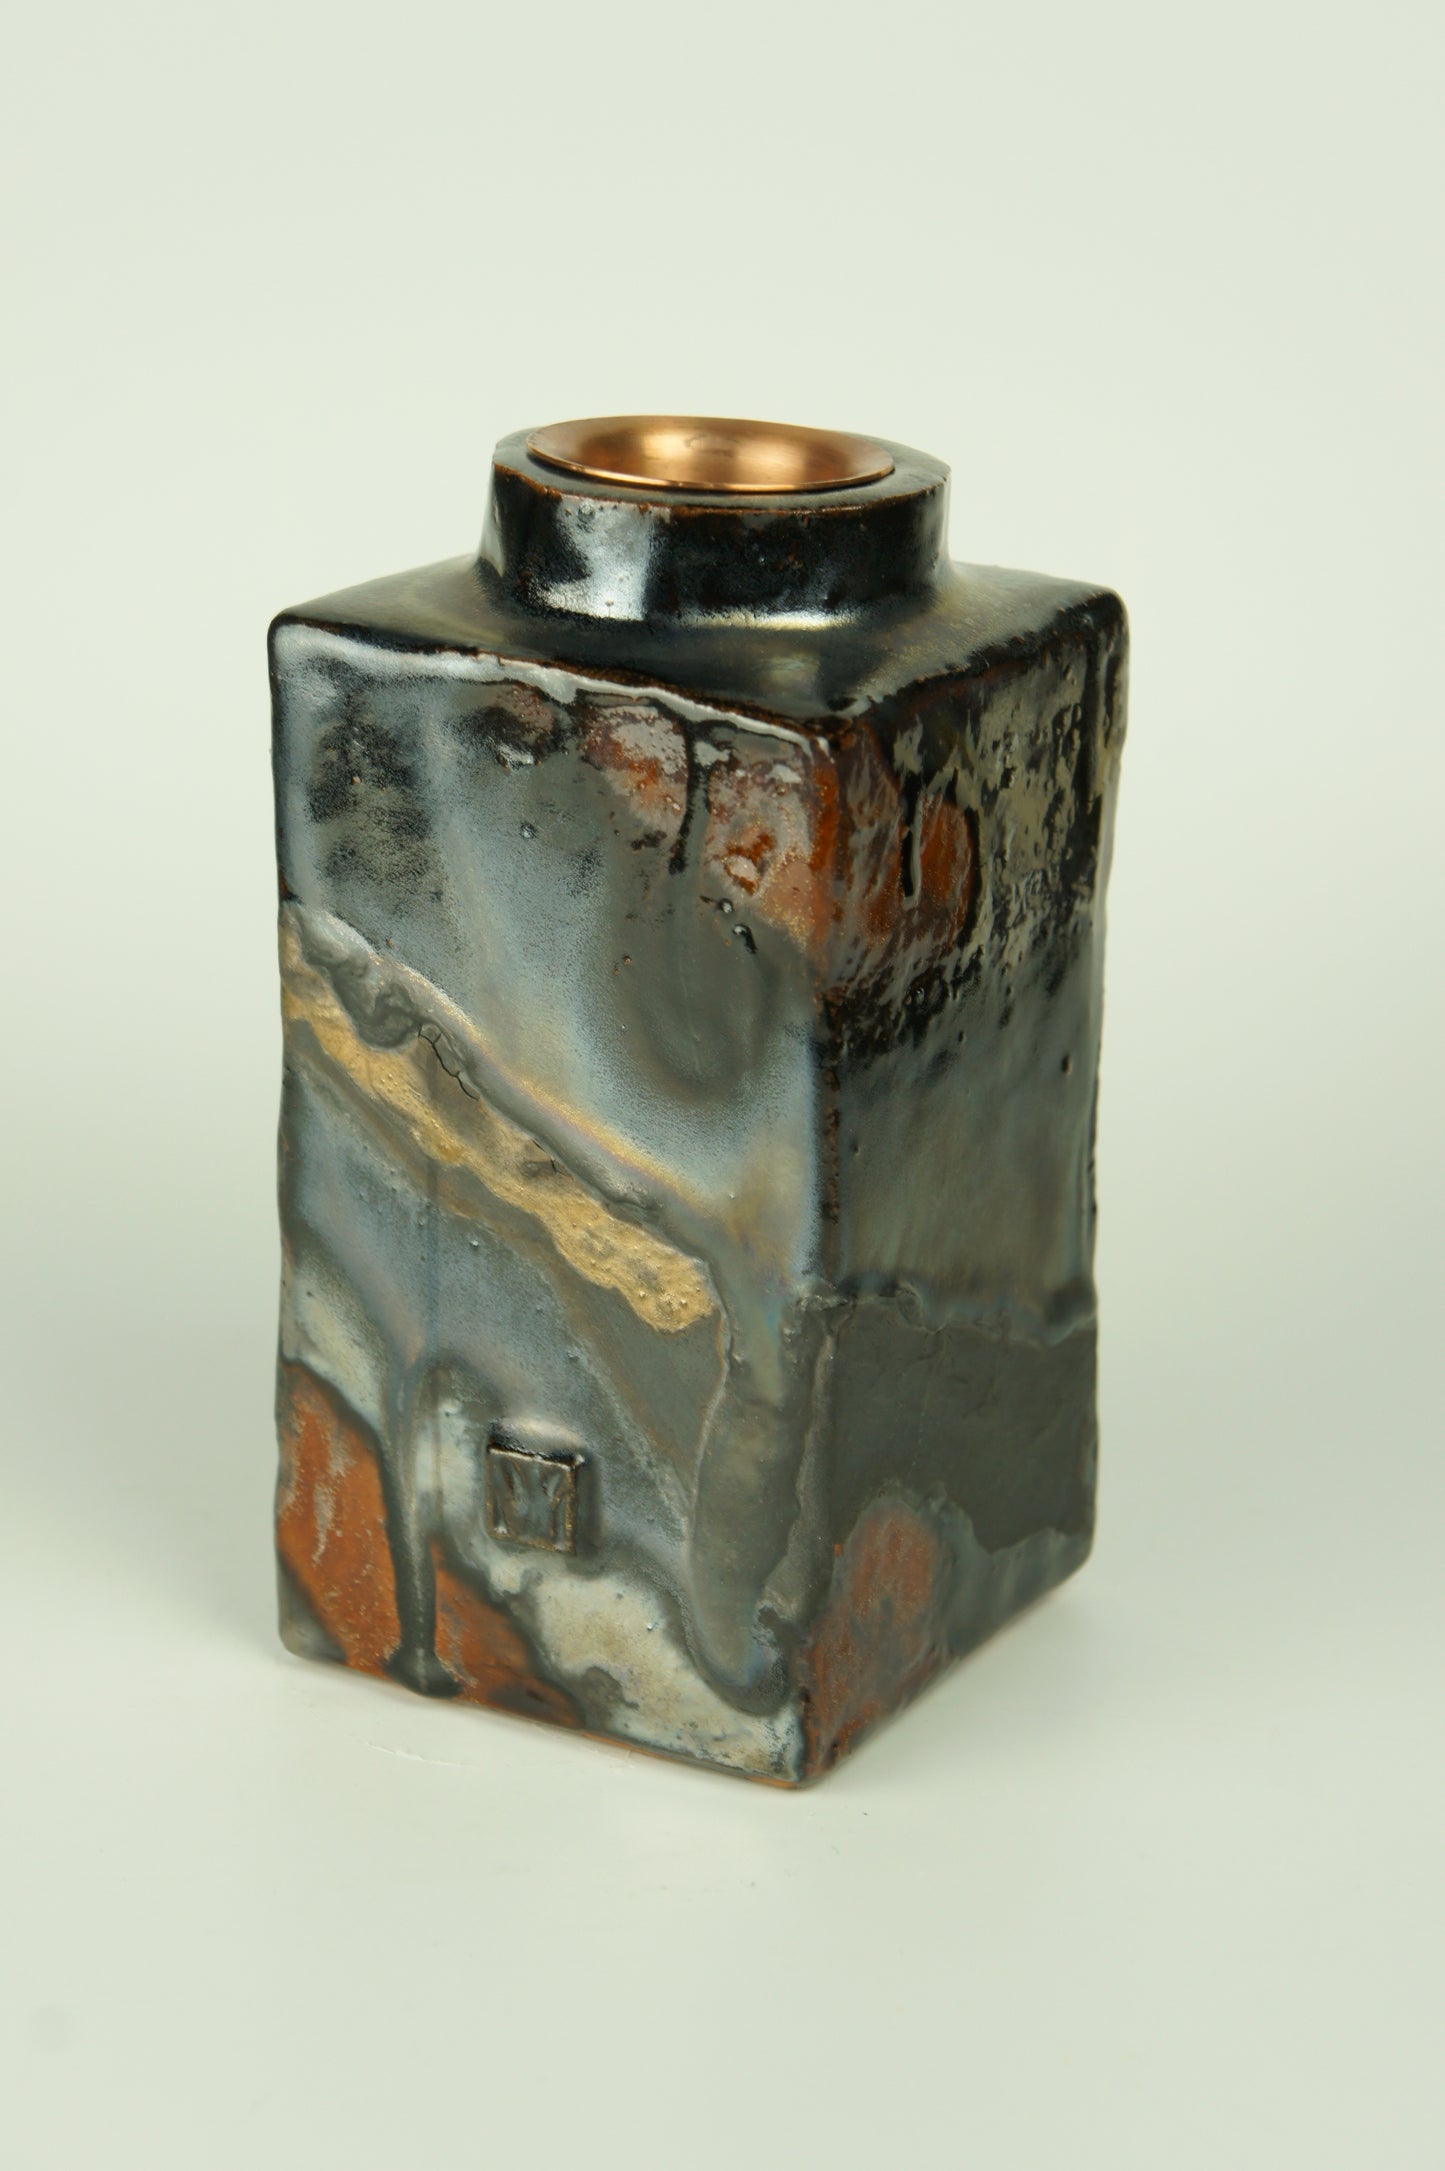 Ceramic diffuser for home fragrances